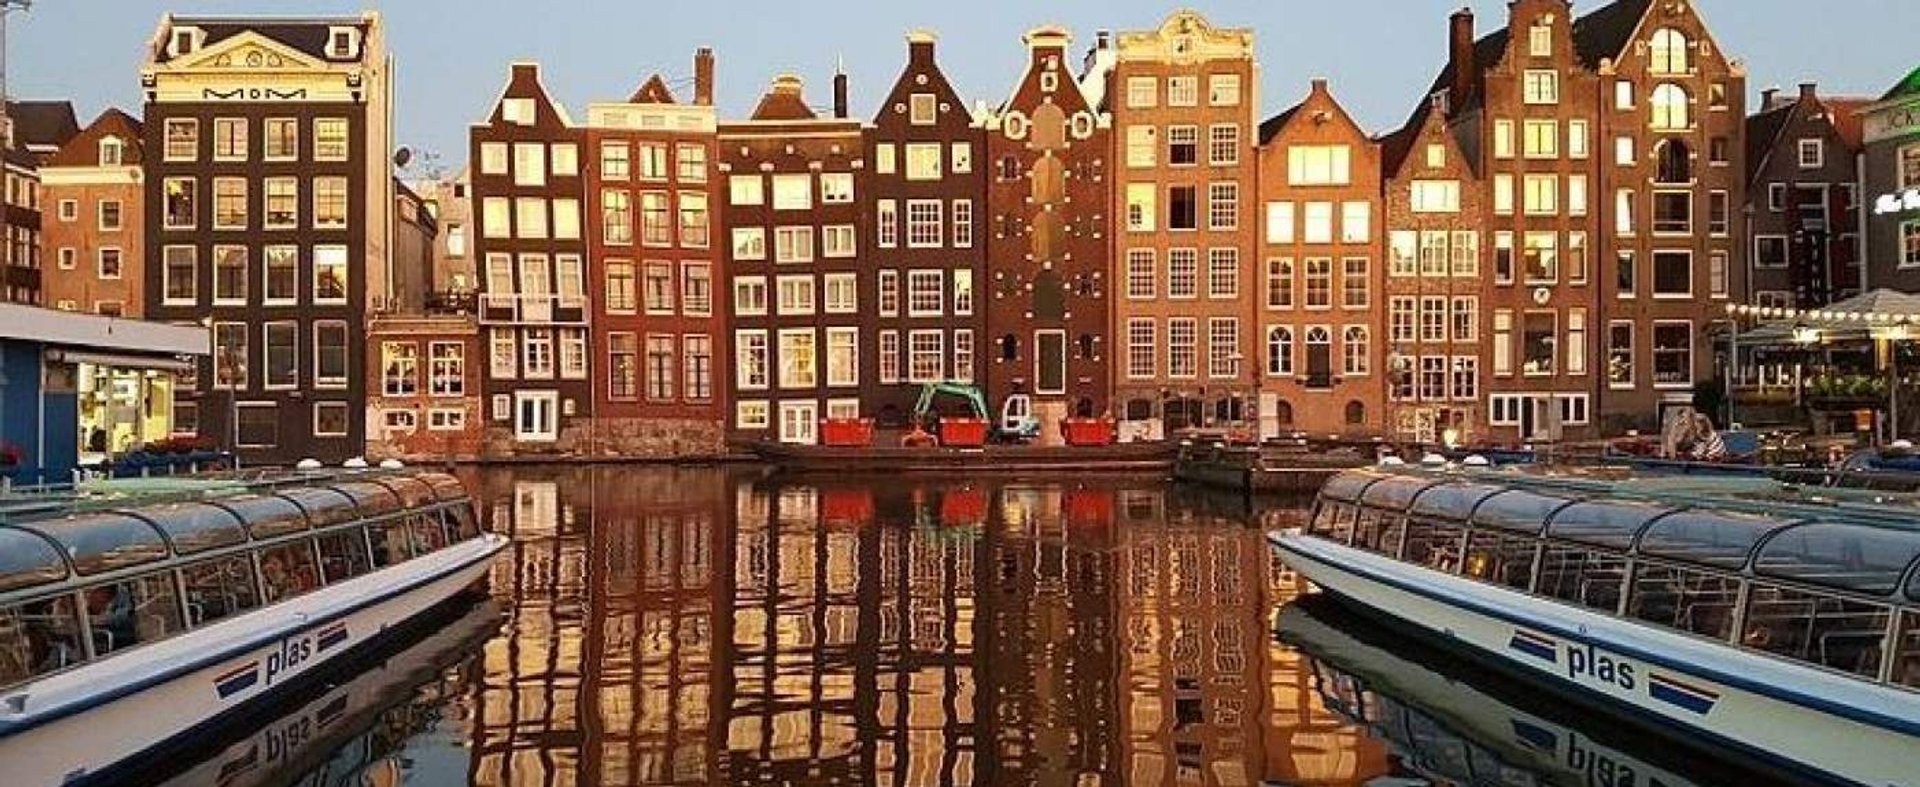 stolica Niderlandów, Amsterdam